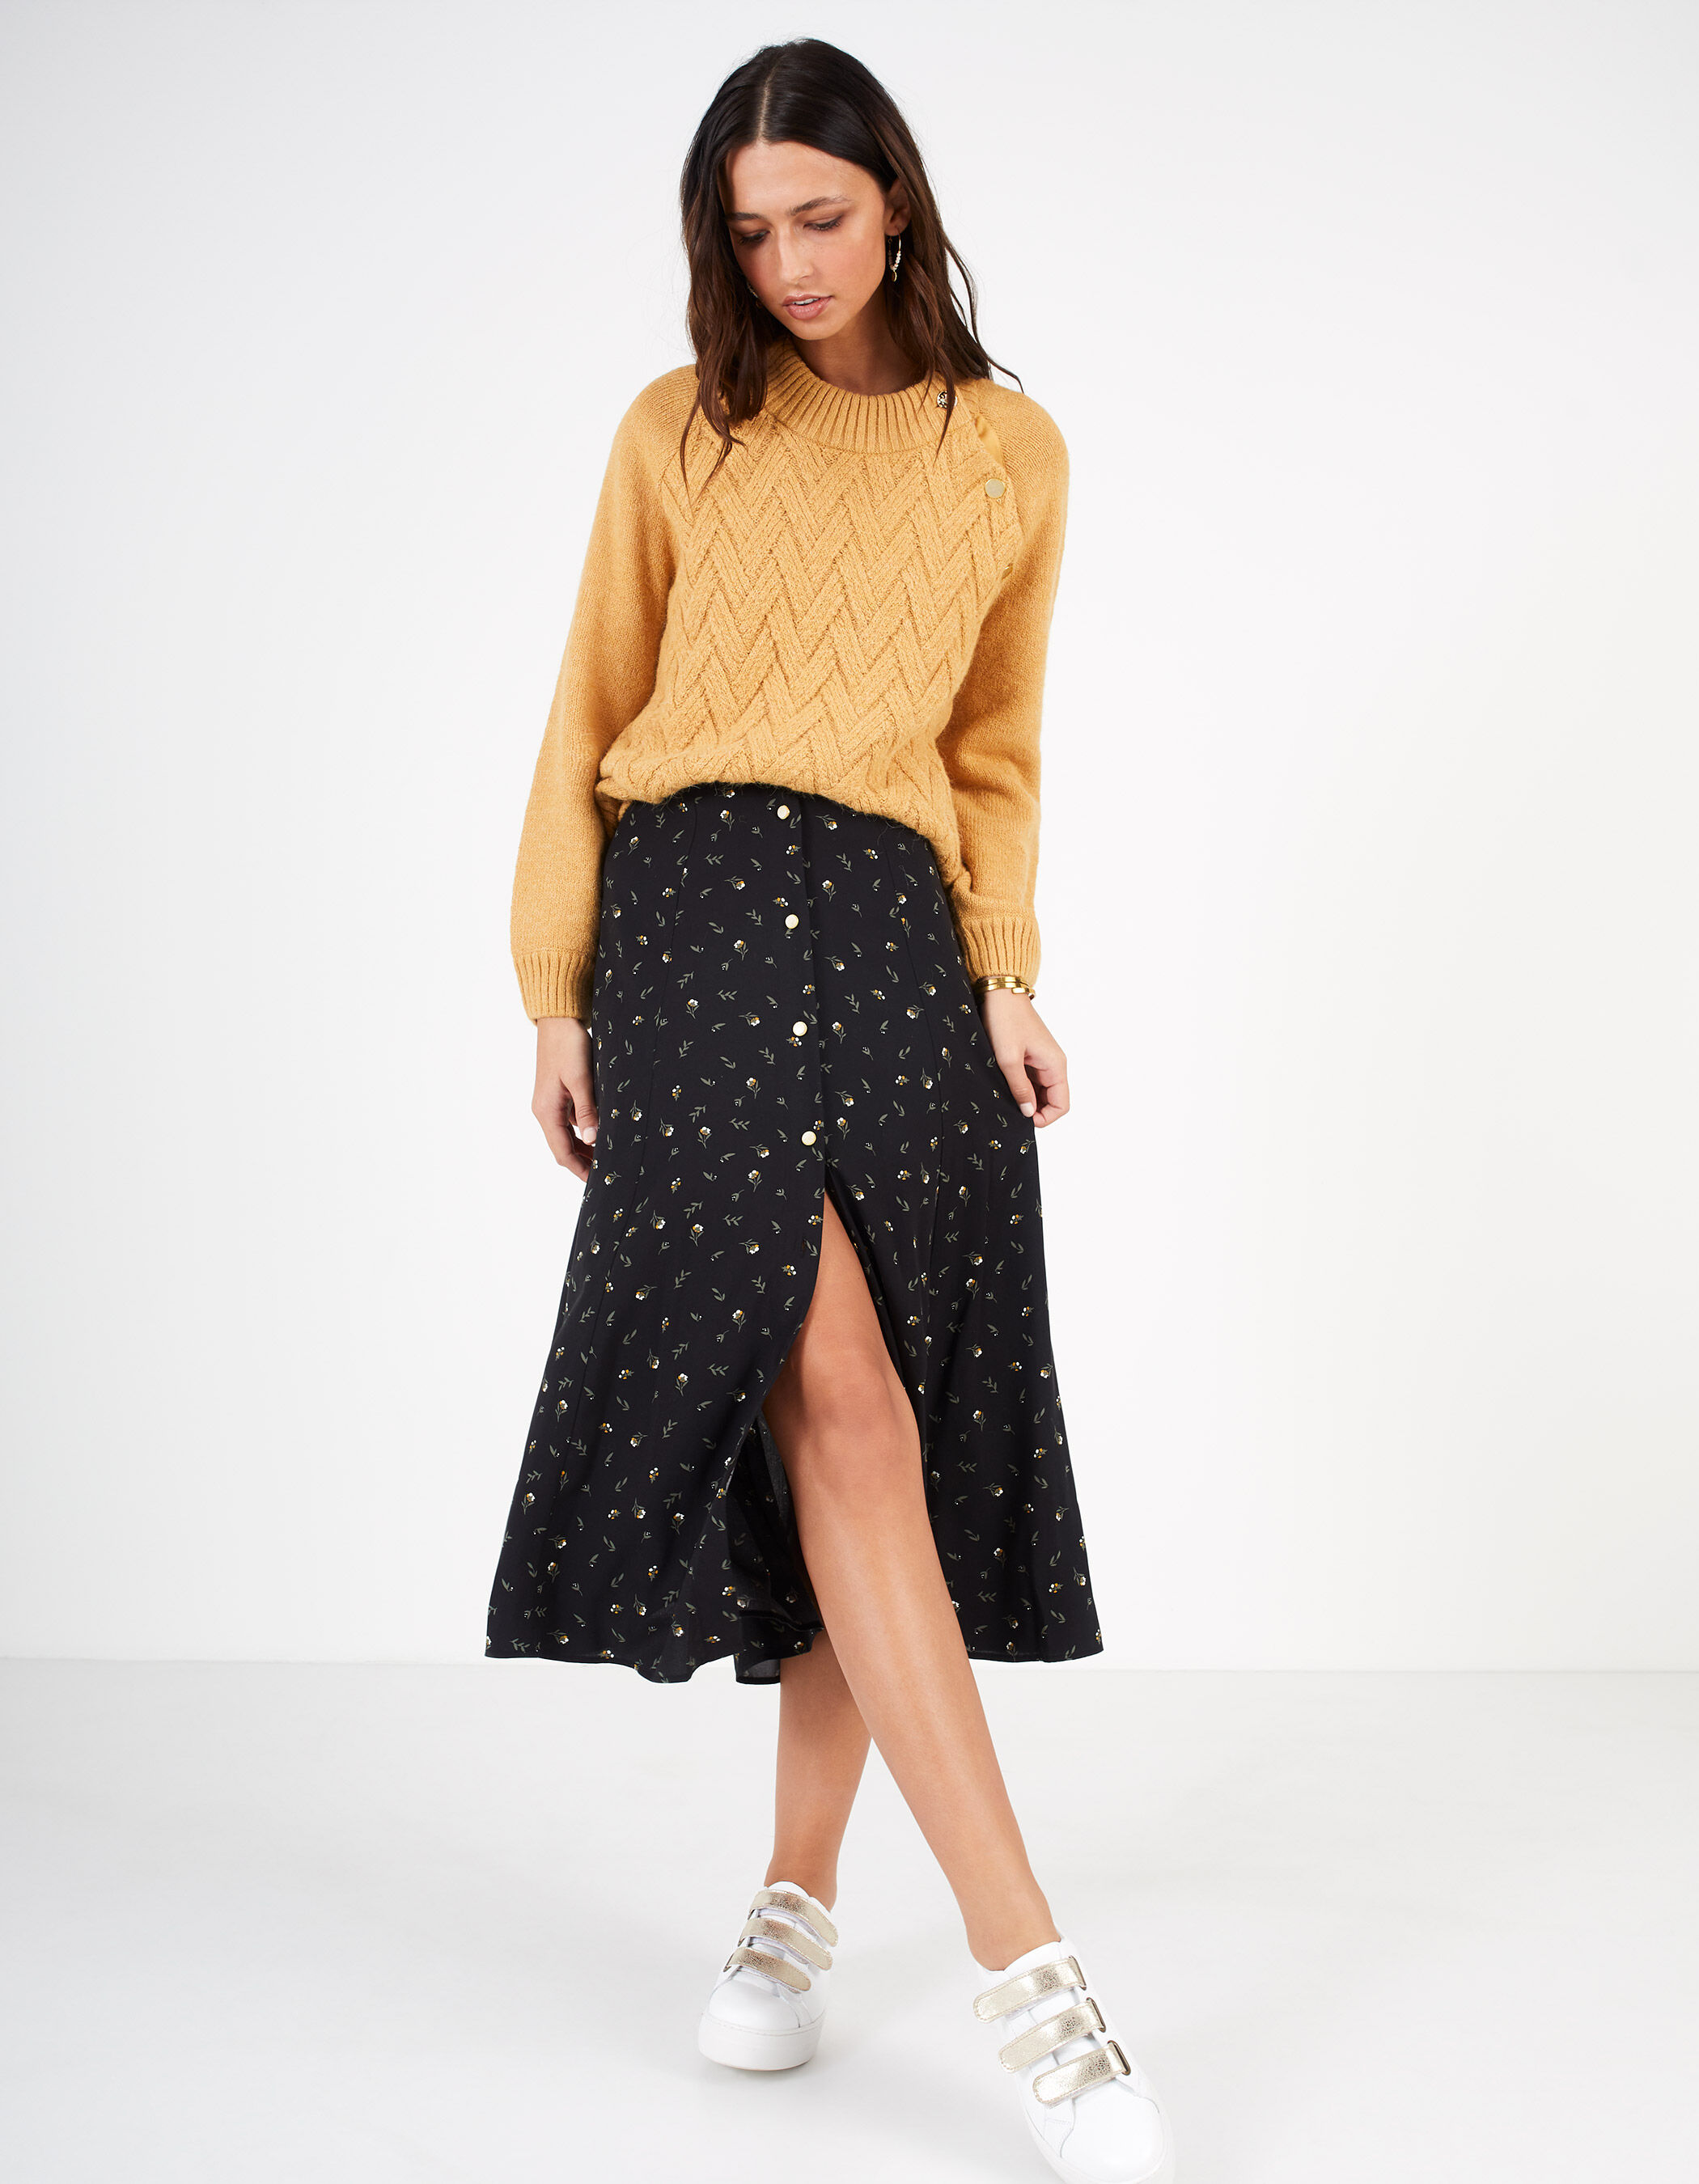 I.Code black midi skirt with minimalistic floral print